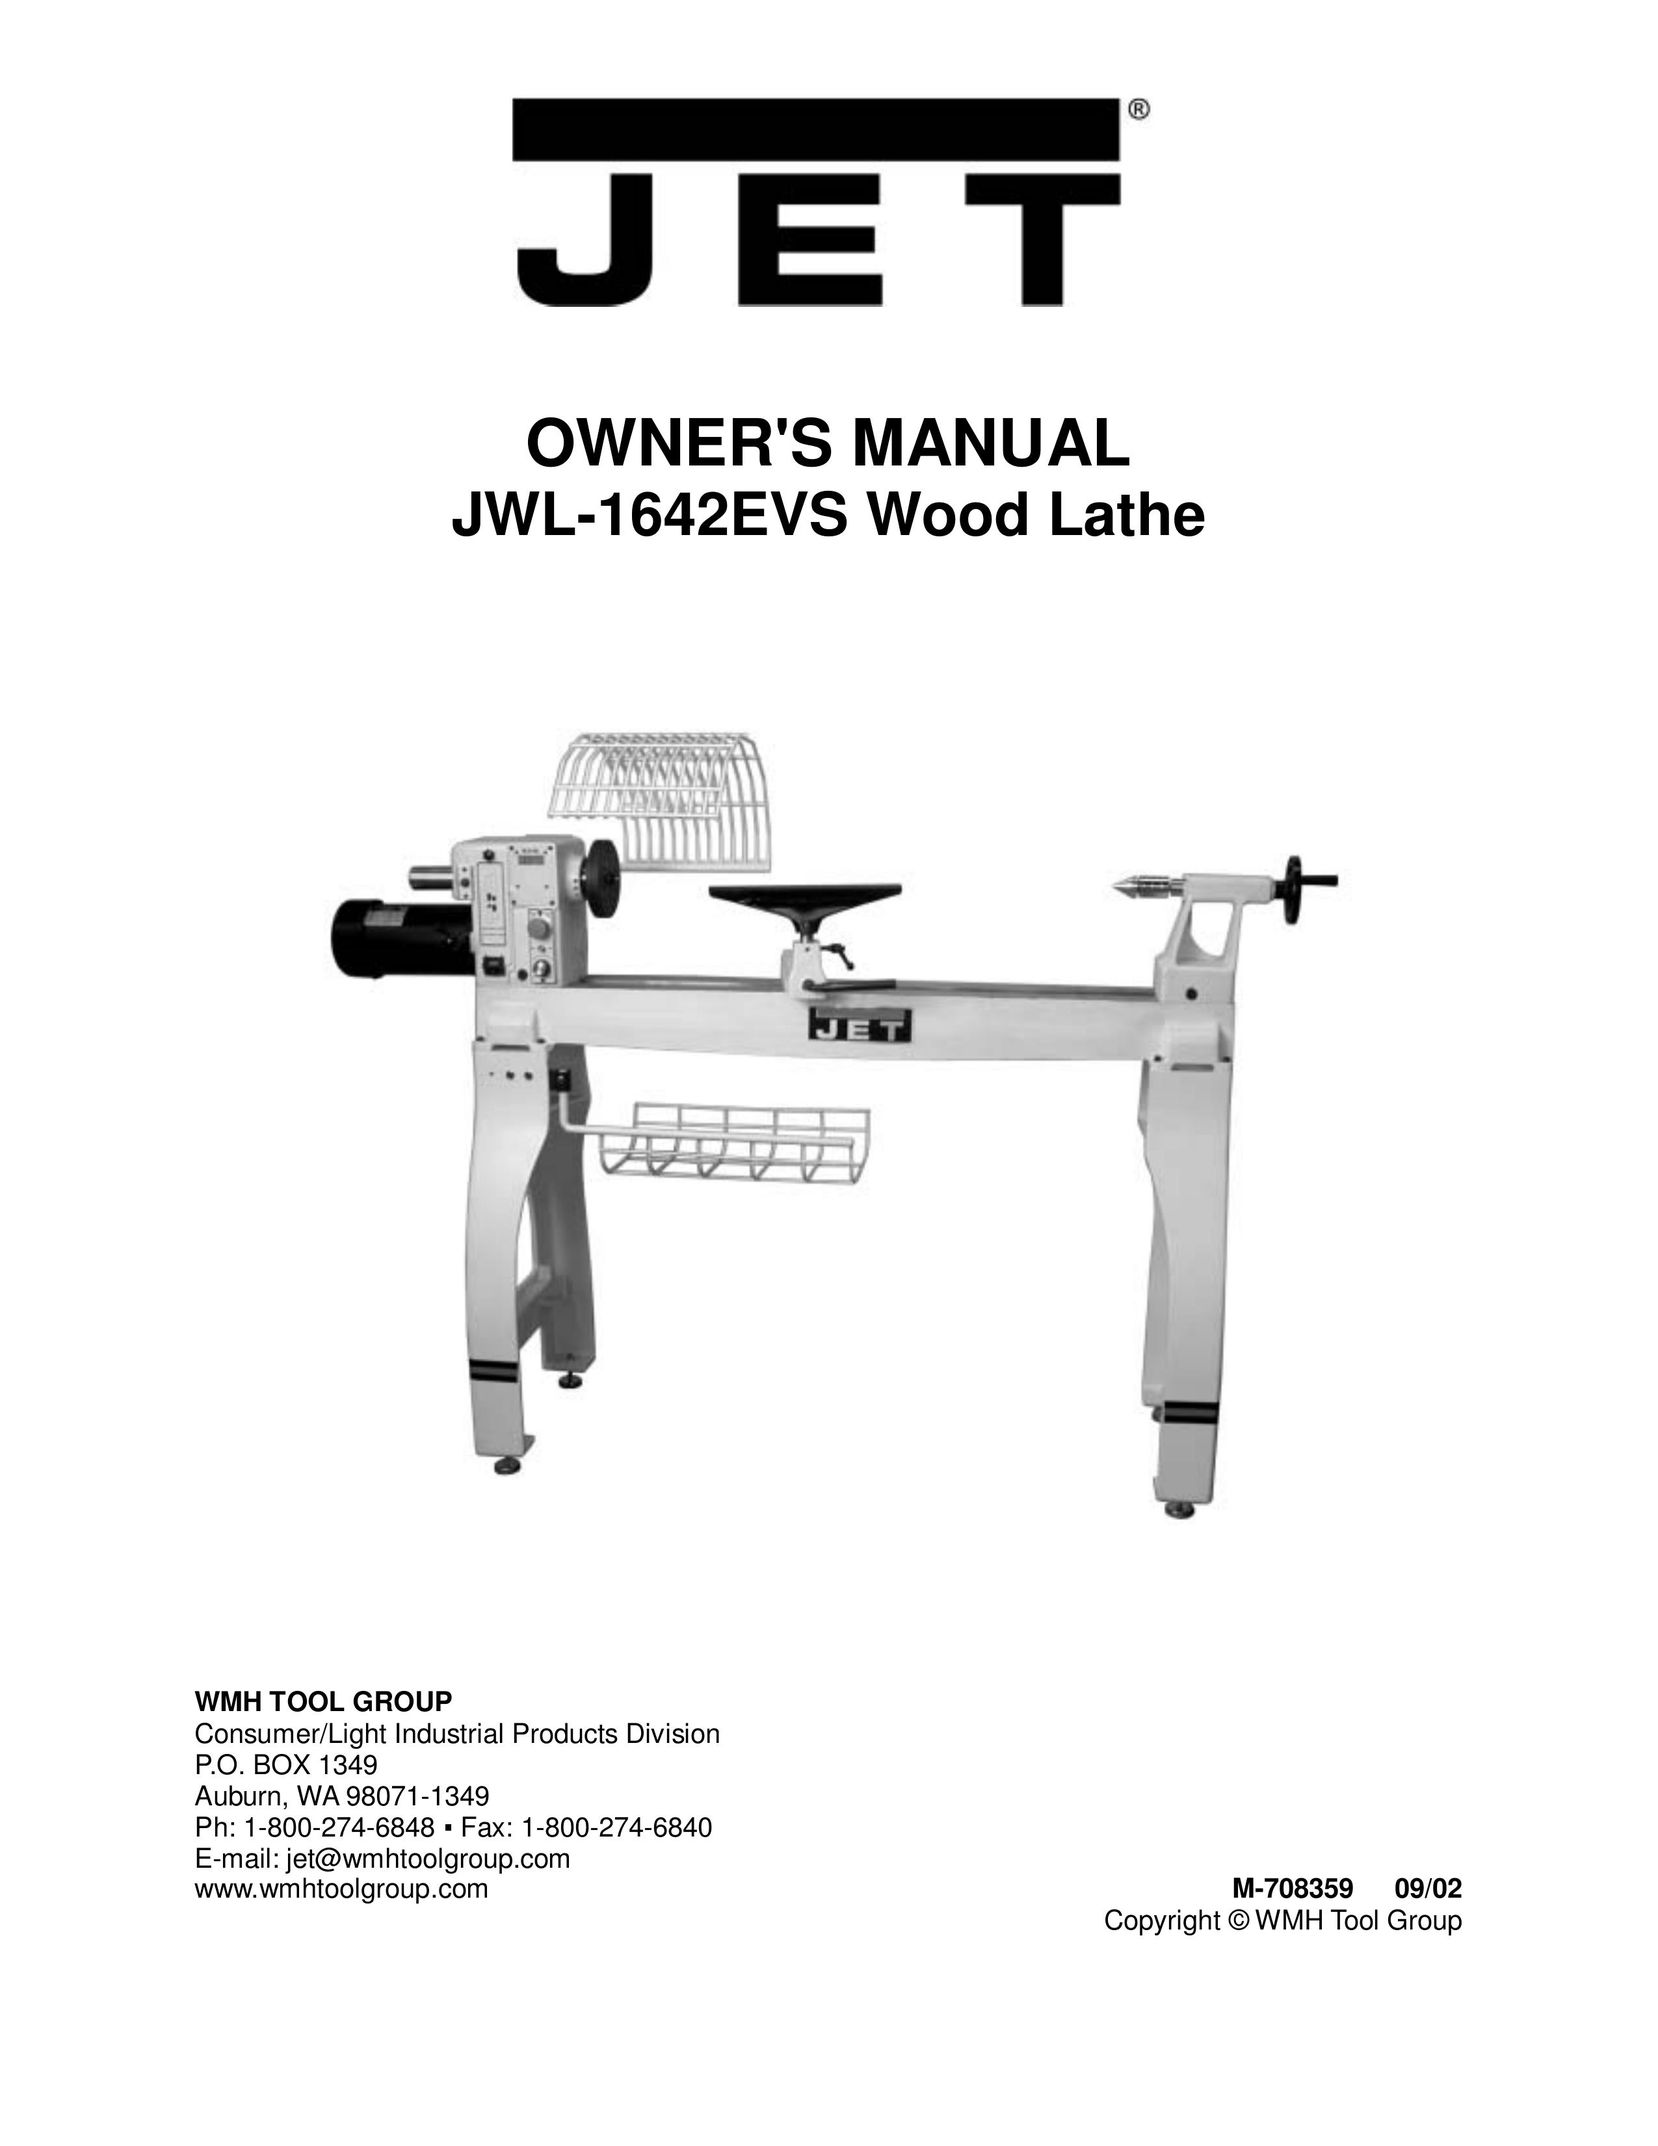 Jet Tools JWL-1642EVS Lathe User Manual